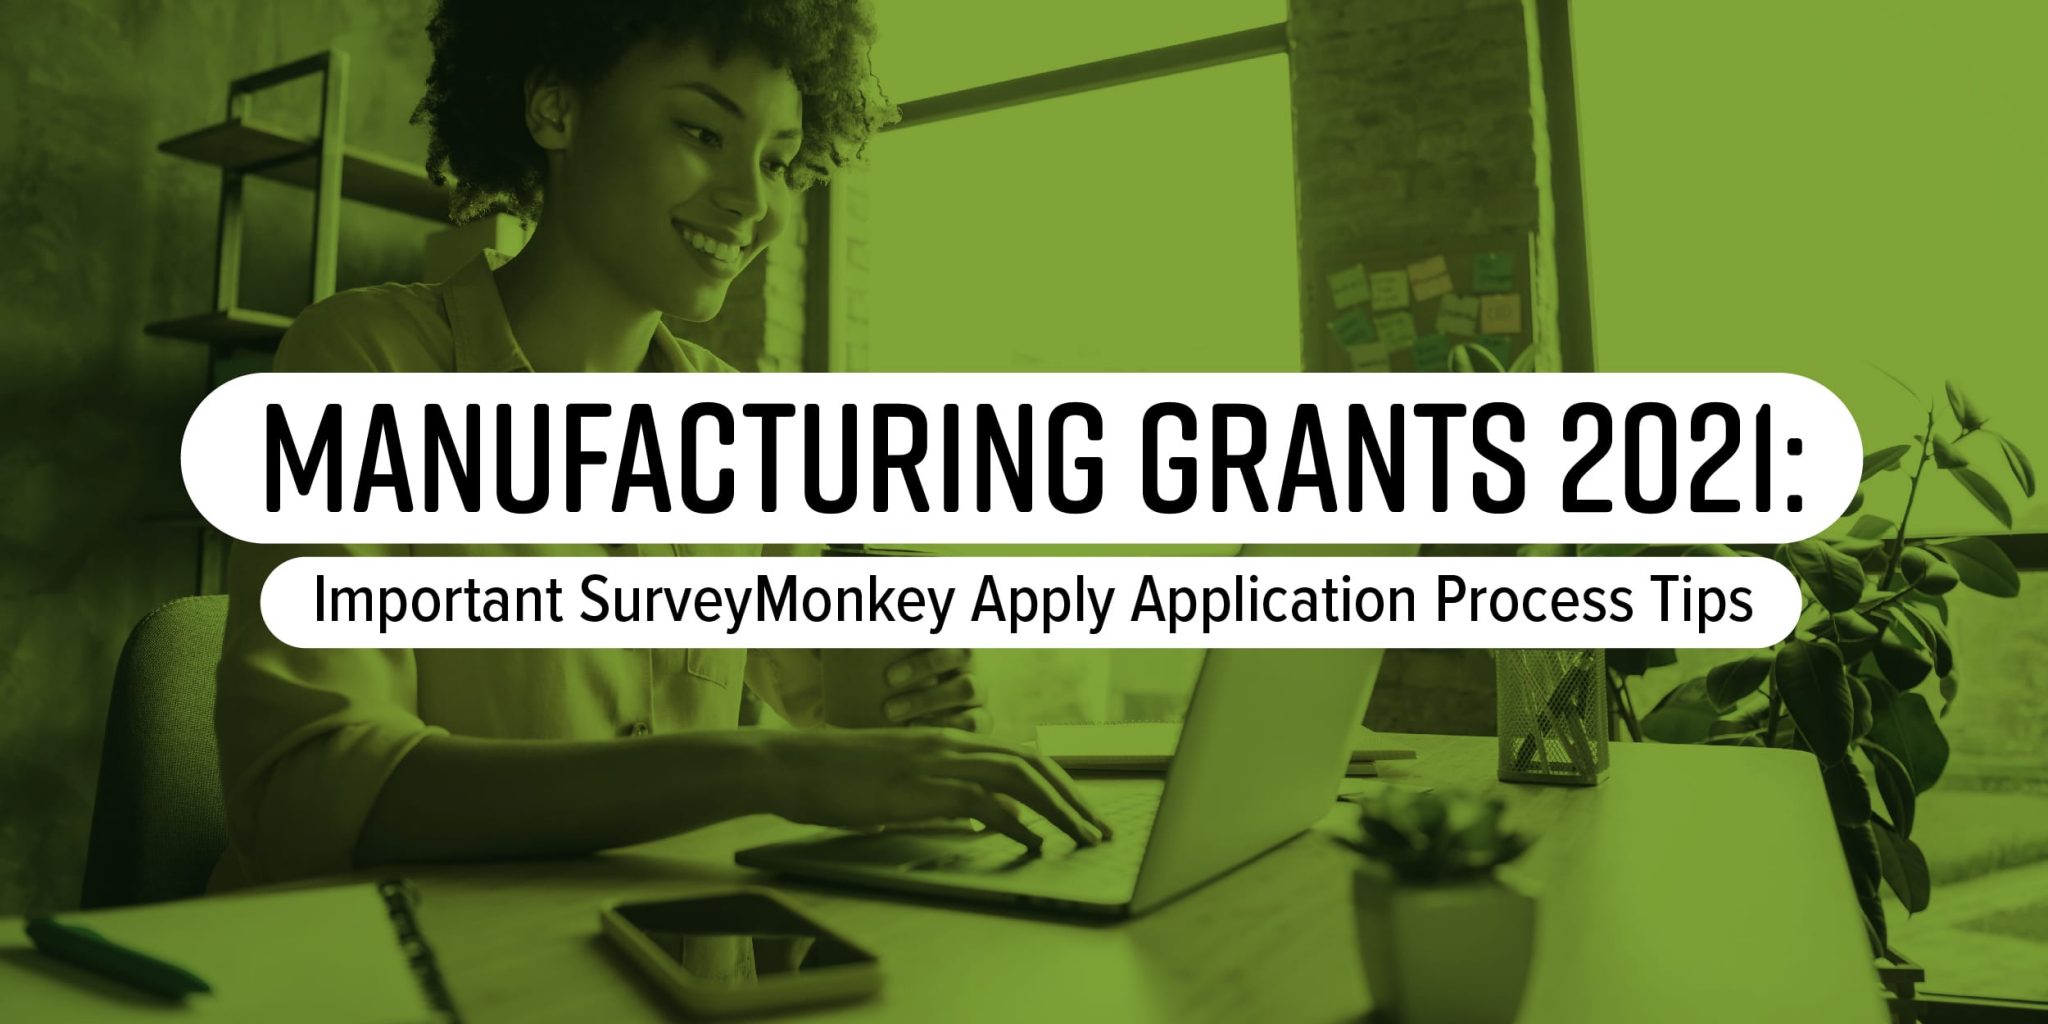 Manufacturing Grants 2021 Important SurveyMonkey Apply Application